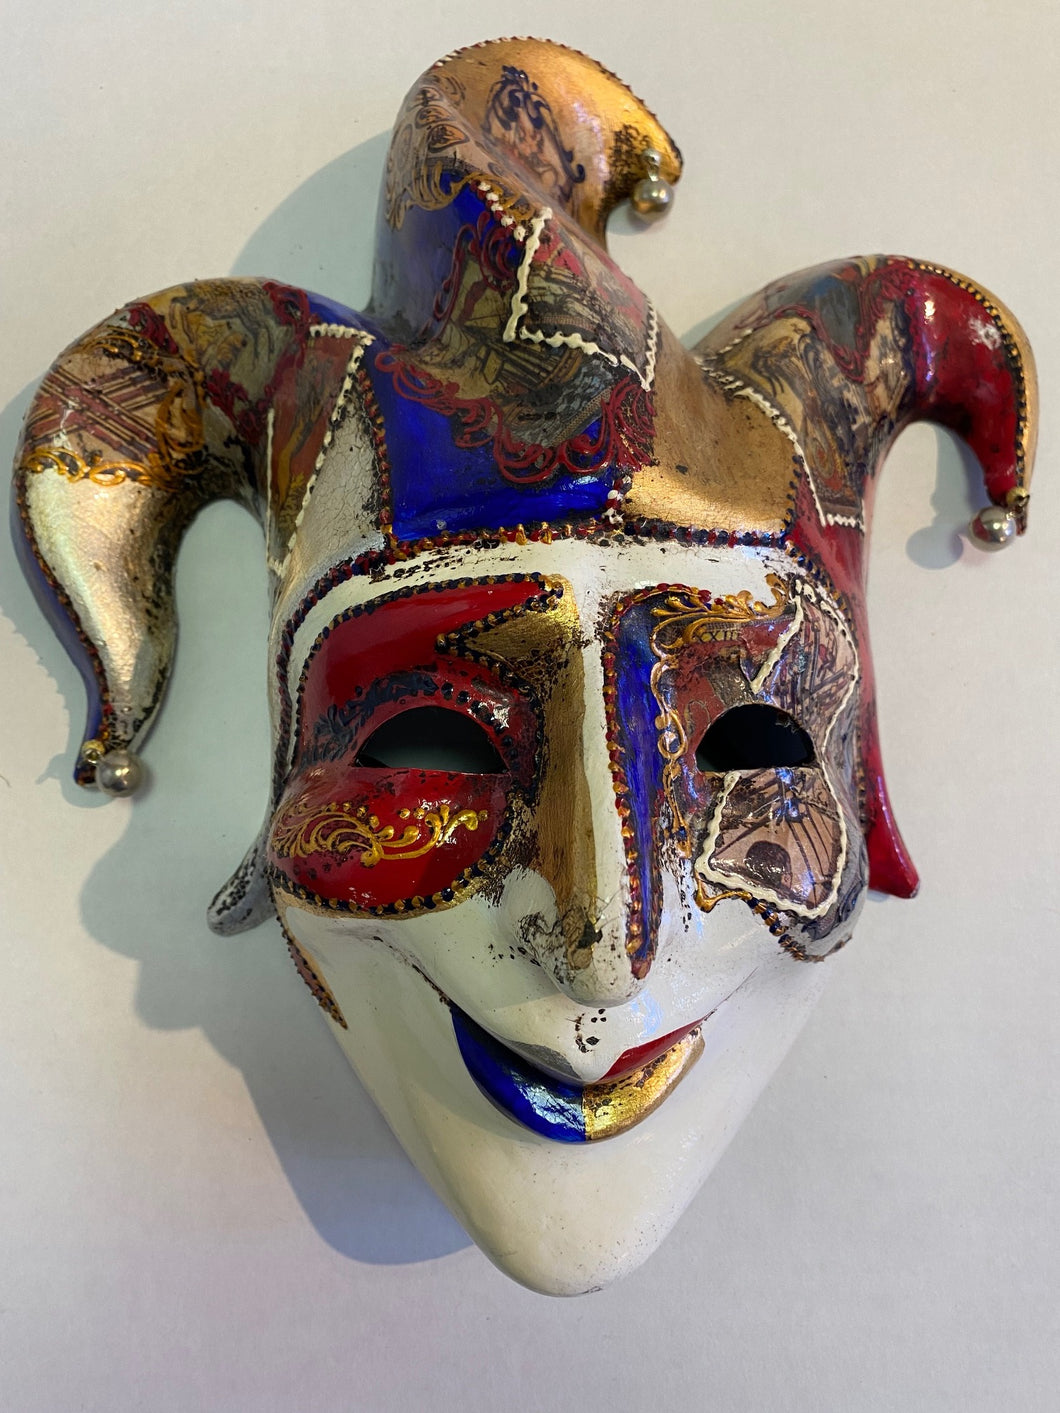 Court Jester Handmade mask from Venice